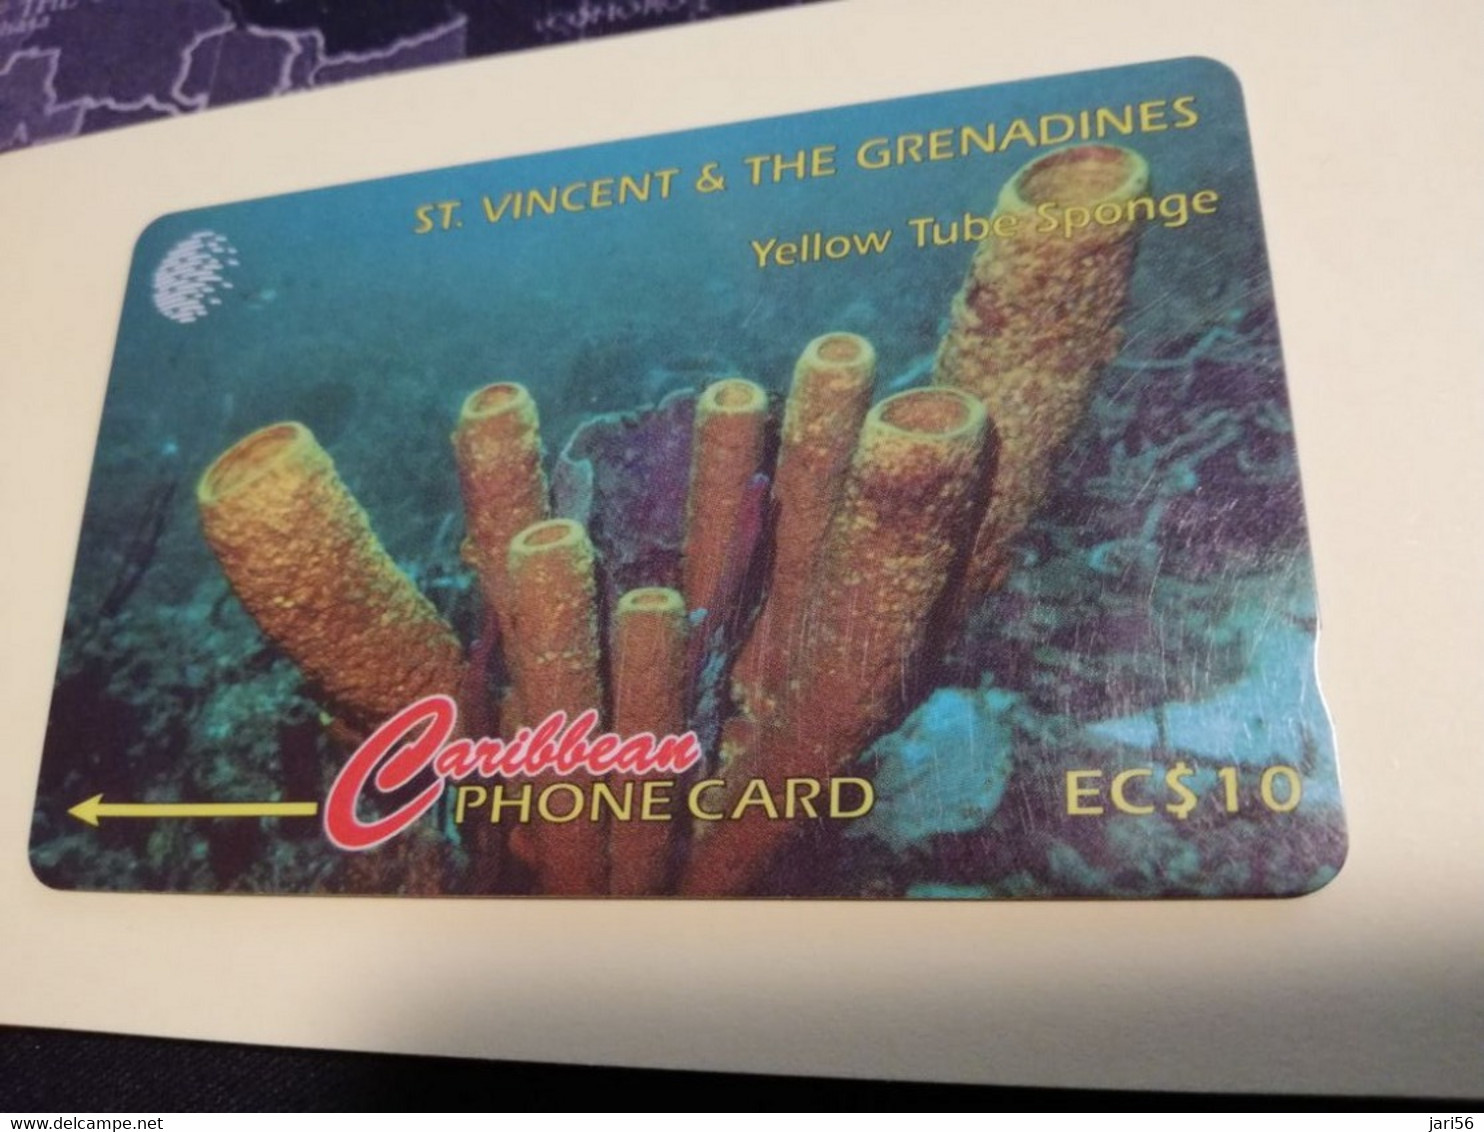 ST VINCENT & GRENADINES  GPT CARD   $ 10,- 52CSVF  YELLOW TUBE SPONGE             C&W    Fine Used  Card  **3380** - St. Vincent & The Grenadines